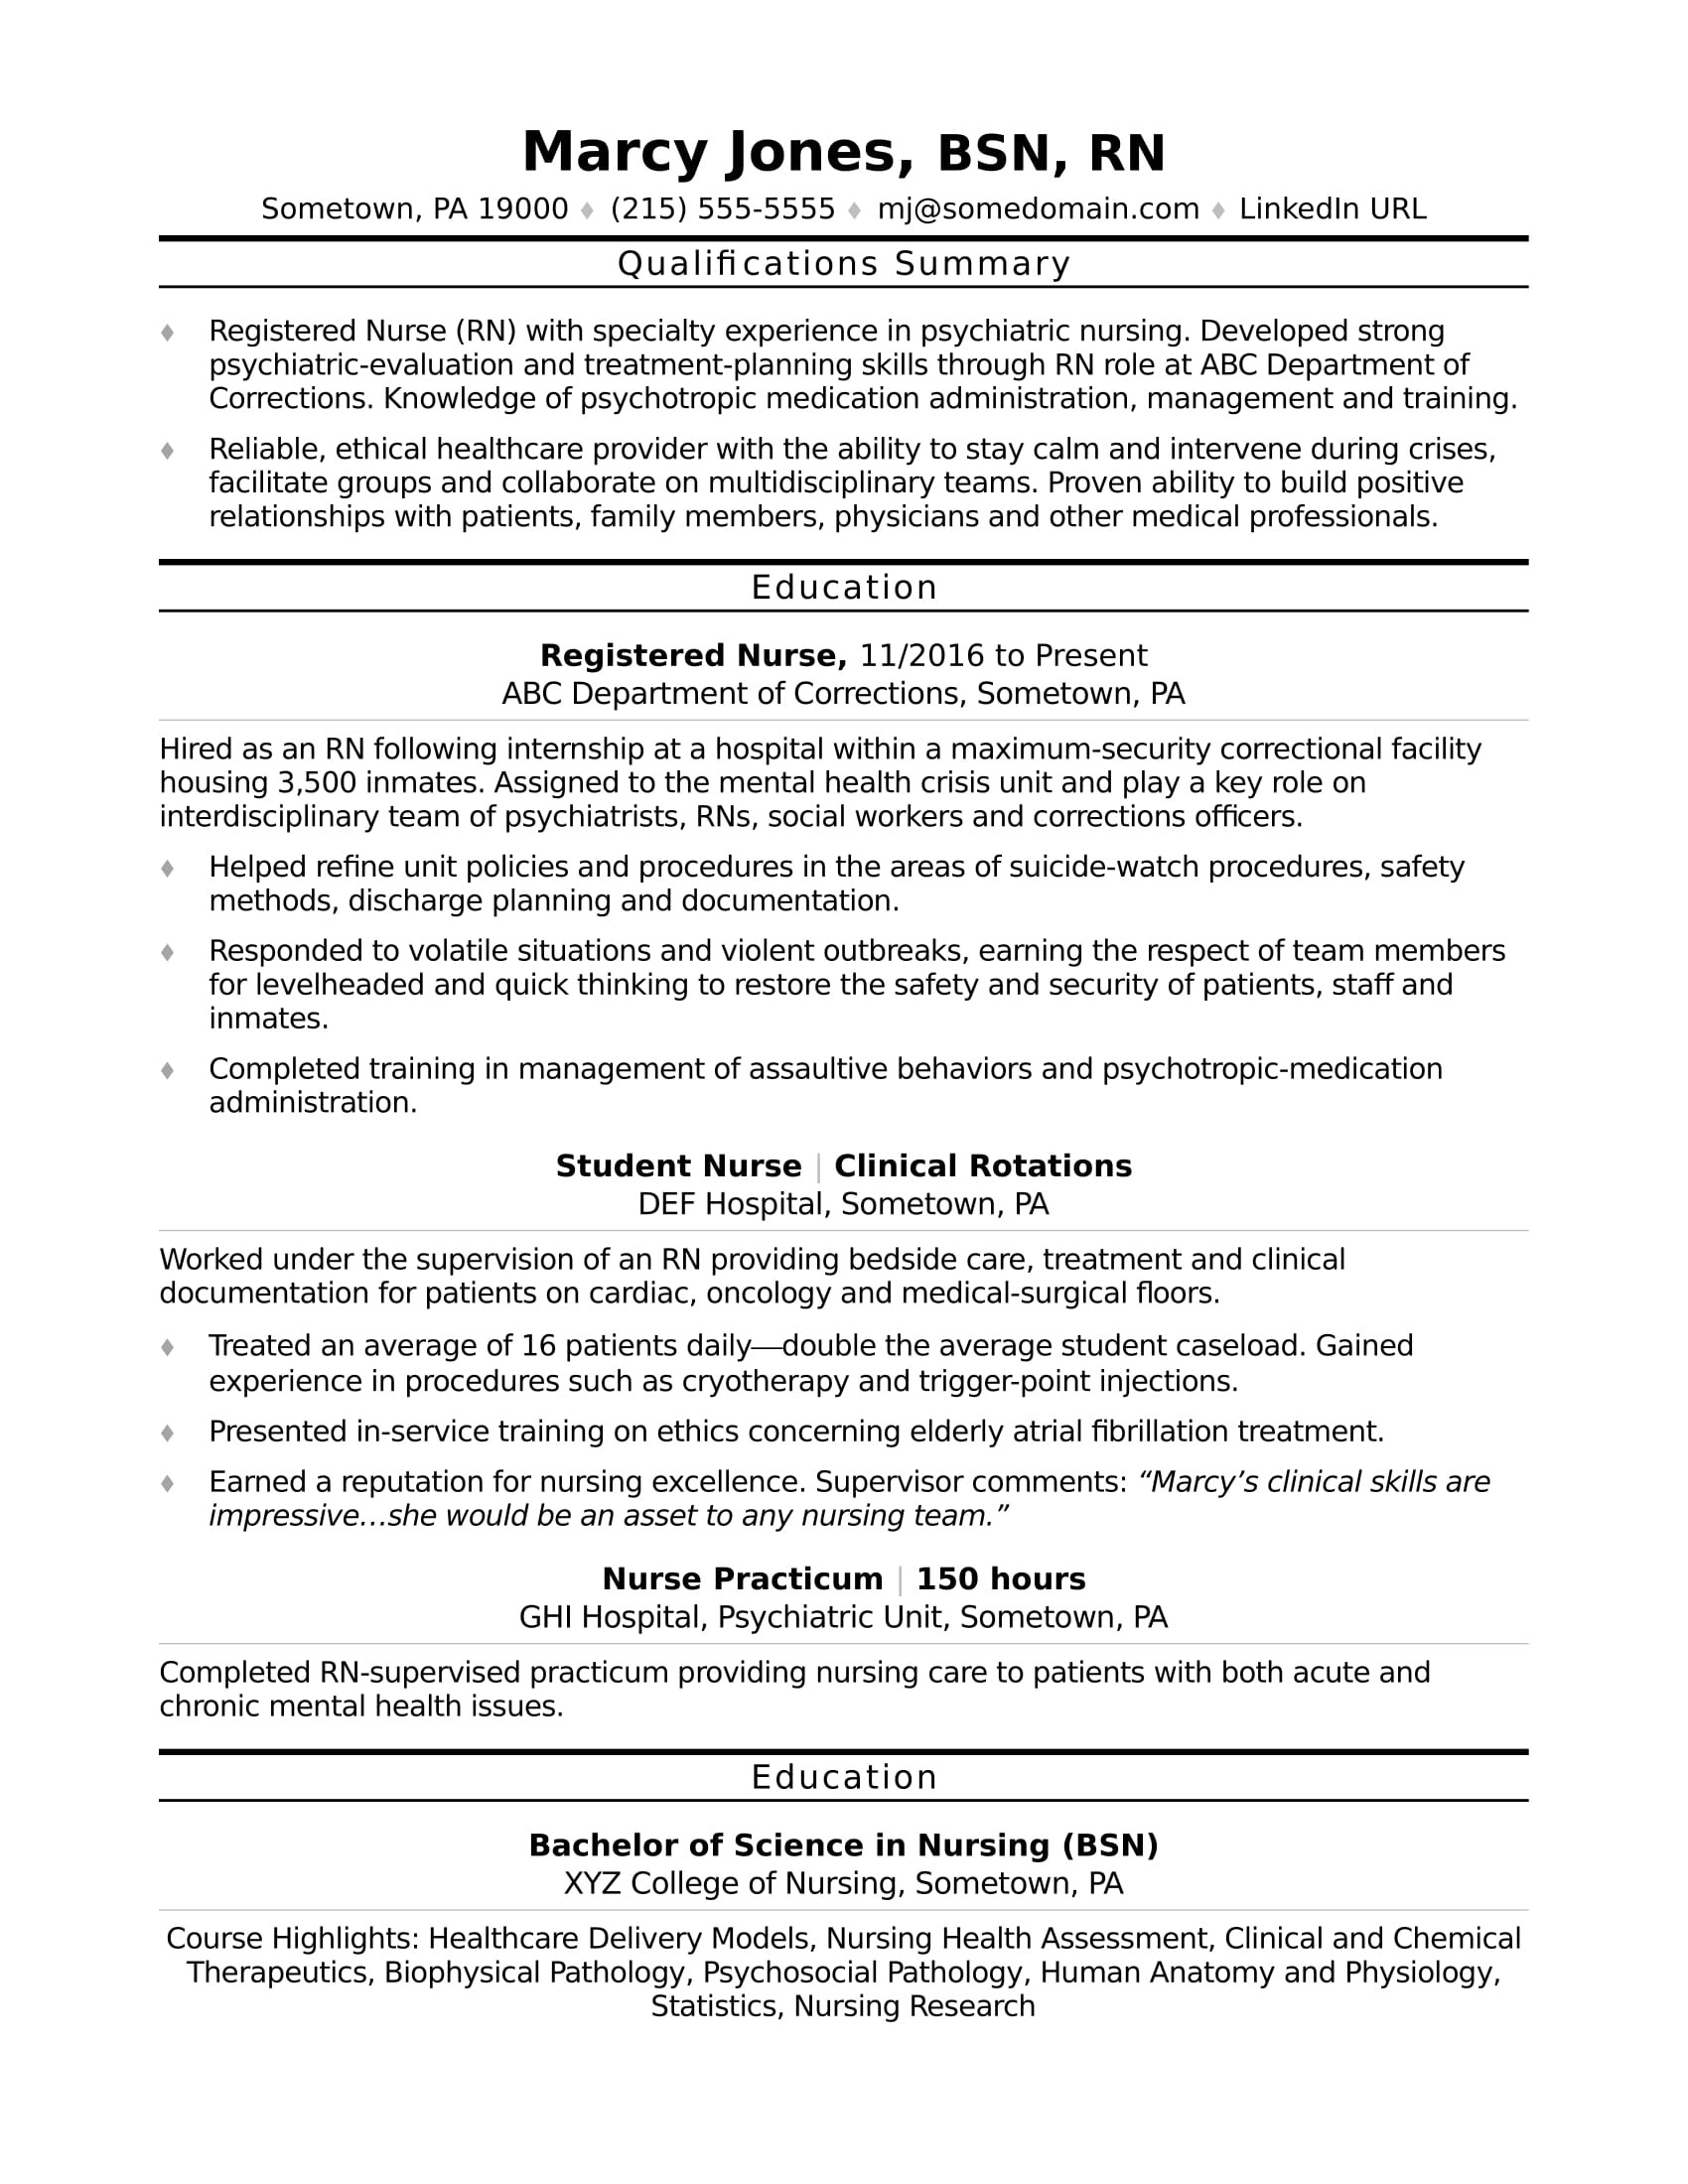 Sample Resume Graduate Nurse No Experience Entry-level Nurse Resume Monster.com